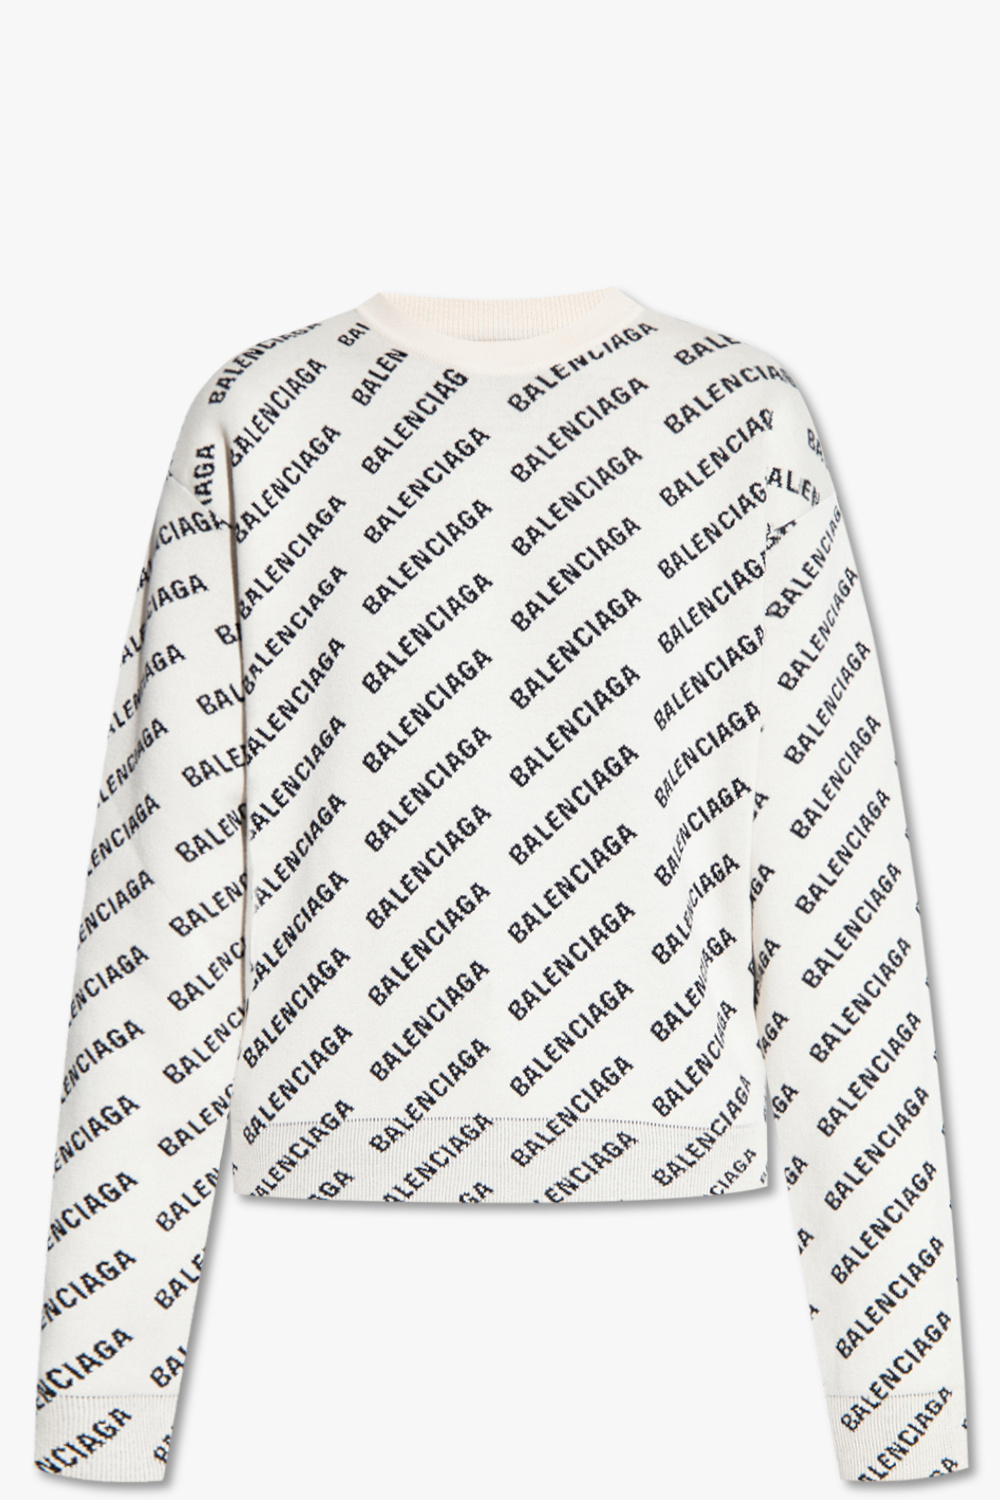 Balenciaga Nike Icon Clash Women's T-Shirt